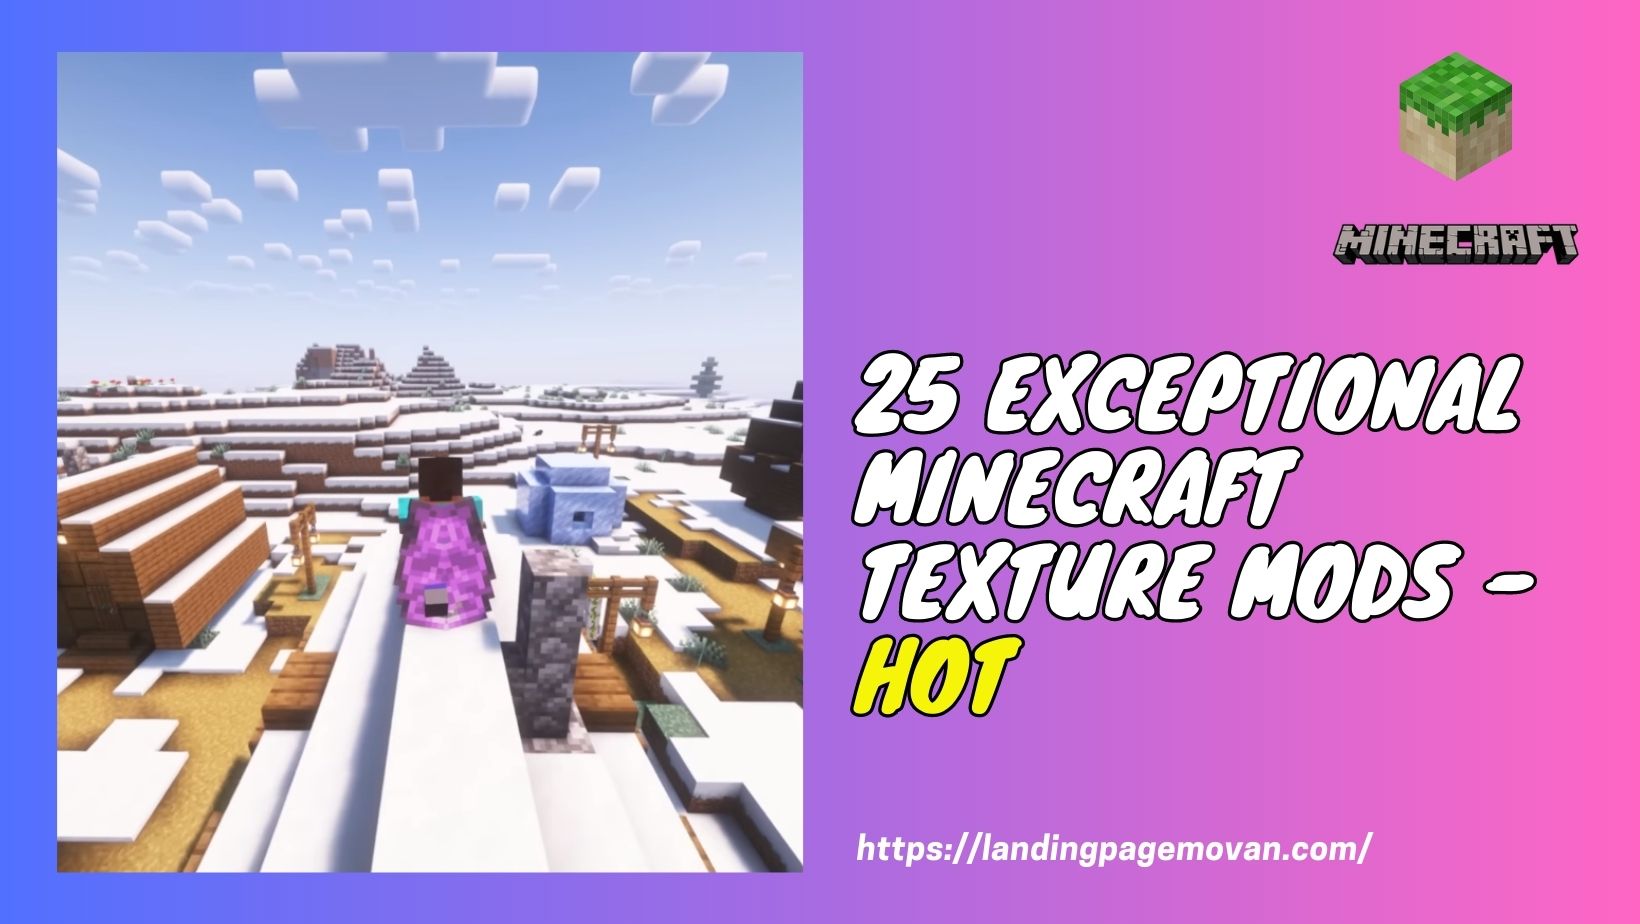 25 Exceptional Minecraft Texture Mods - Hot